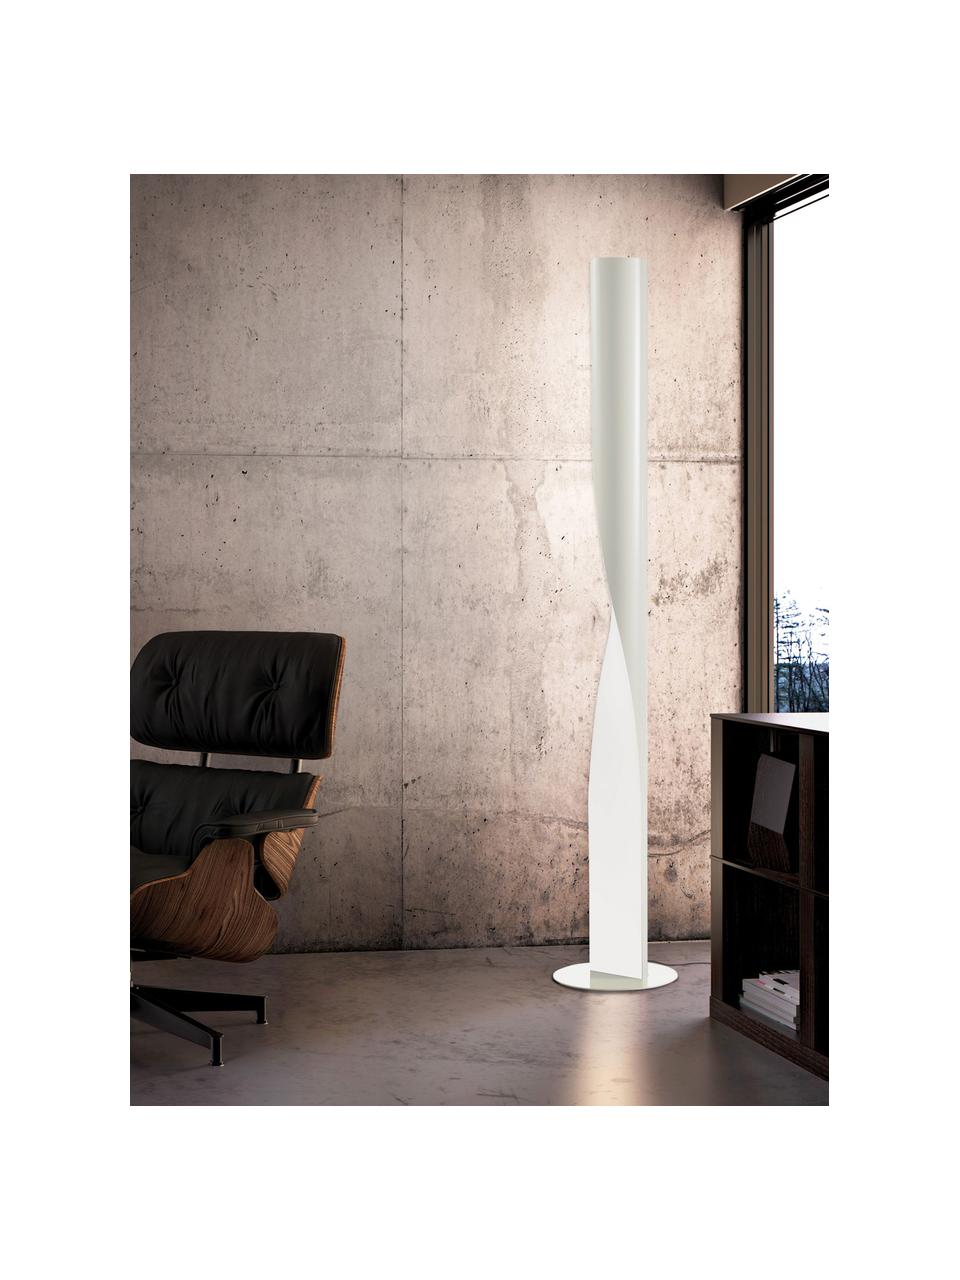 Grote vloerlamp Evita, dimbaar, Diffuser: stof, Gebroken wit, H 190 cm